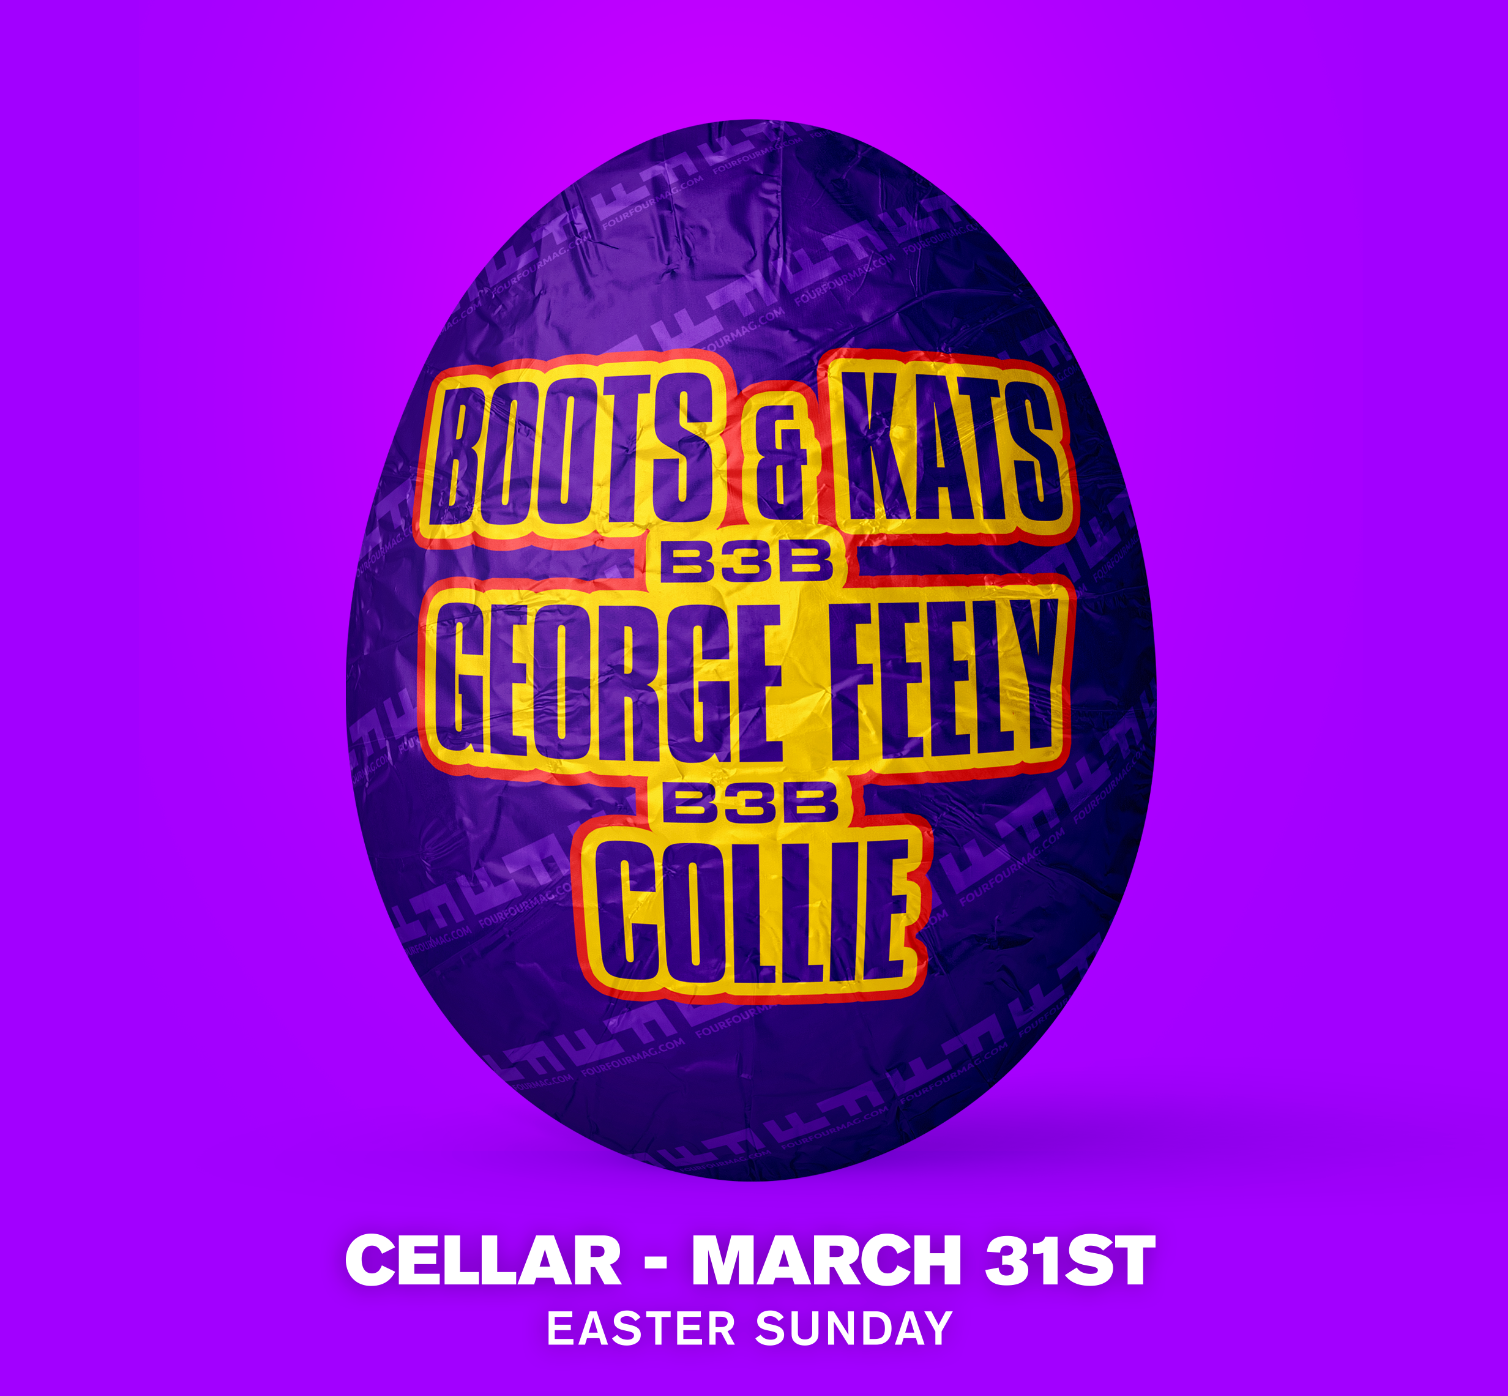 Easter Sunday: Boots & Kats B2B George Feely B2B Collie - Página frontal